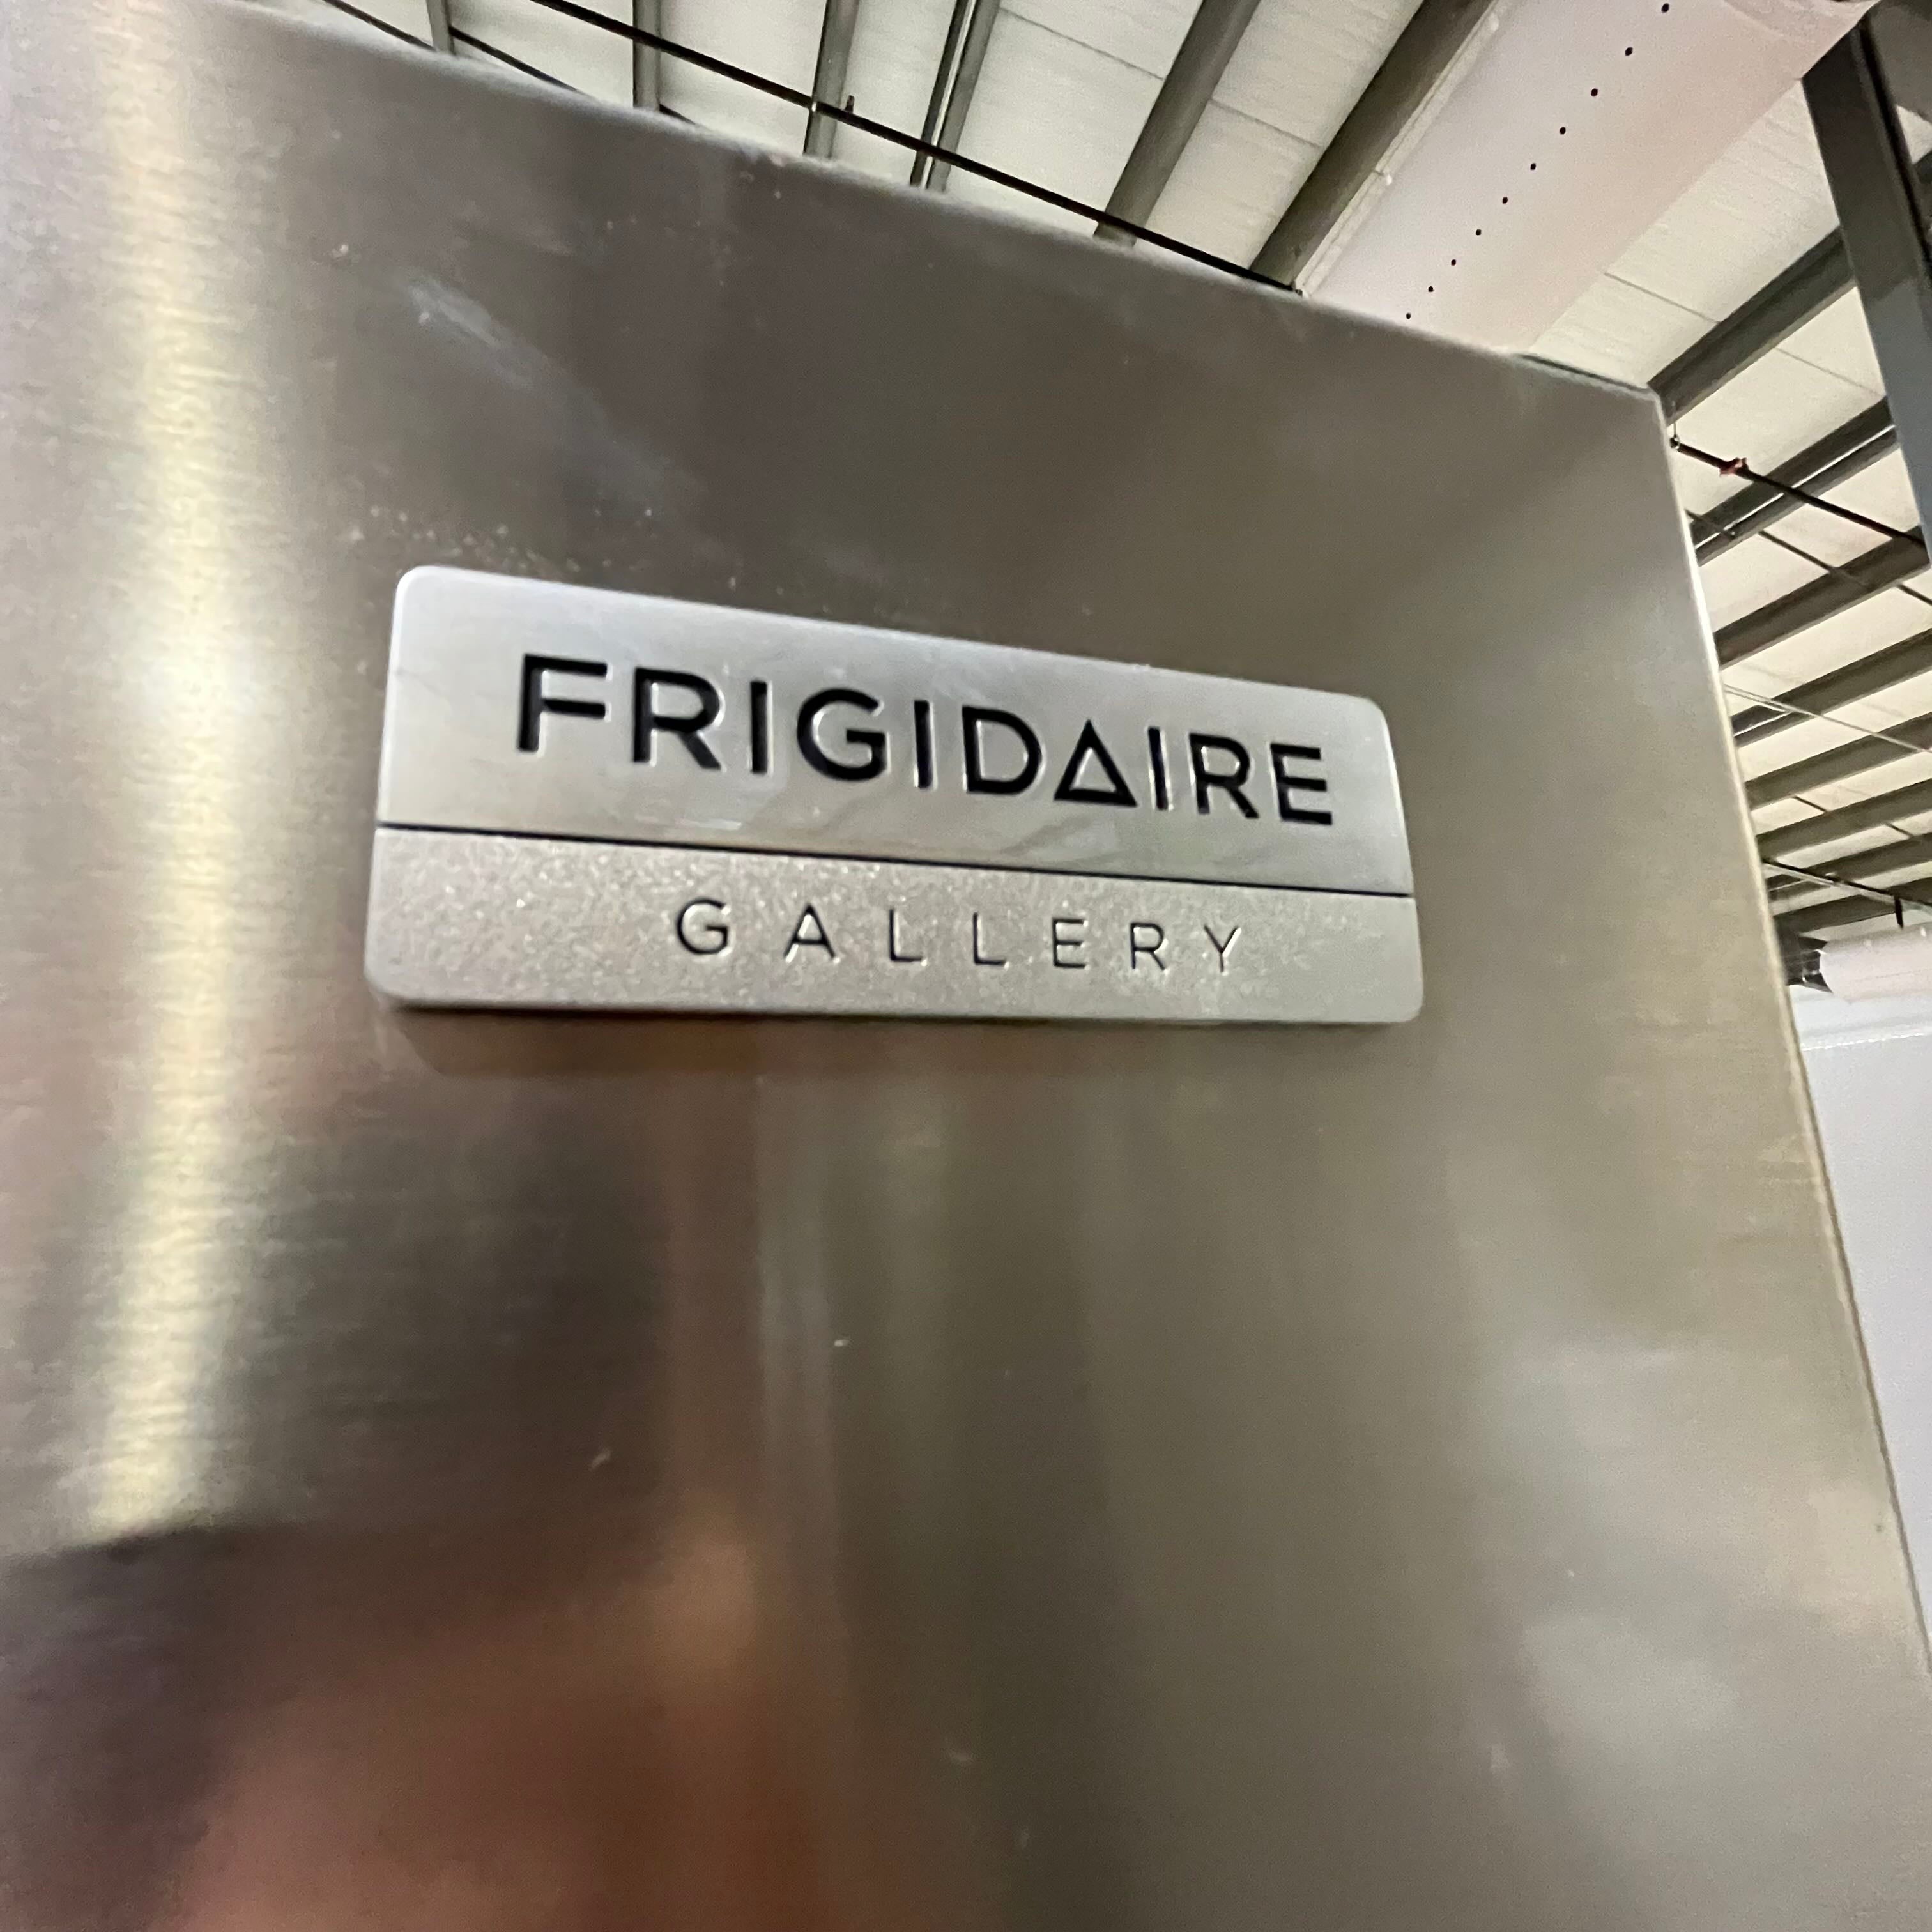 F4623 Frigidaire Gallery French Door Stainless Steel Refrigerator